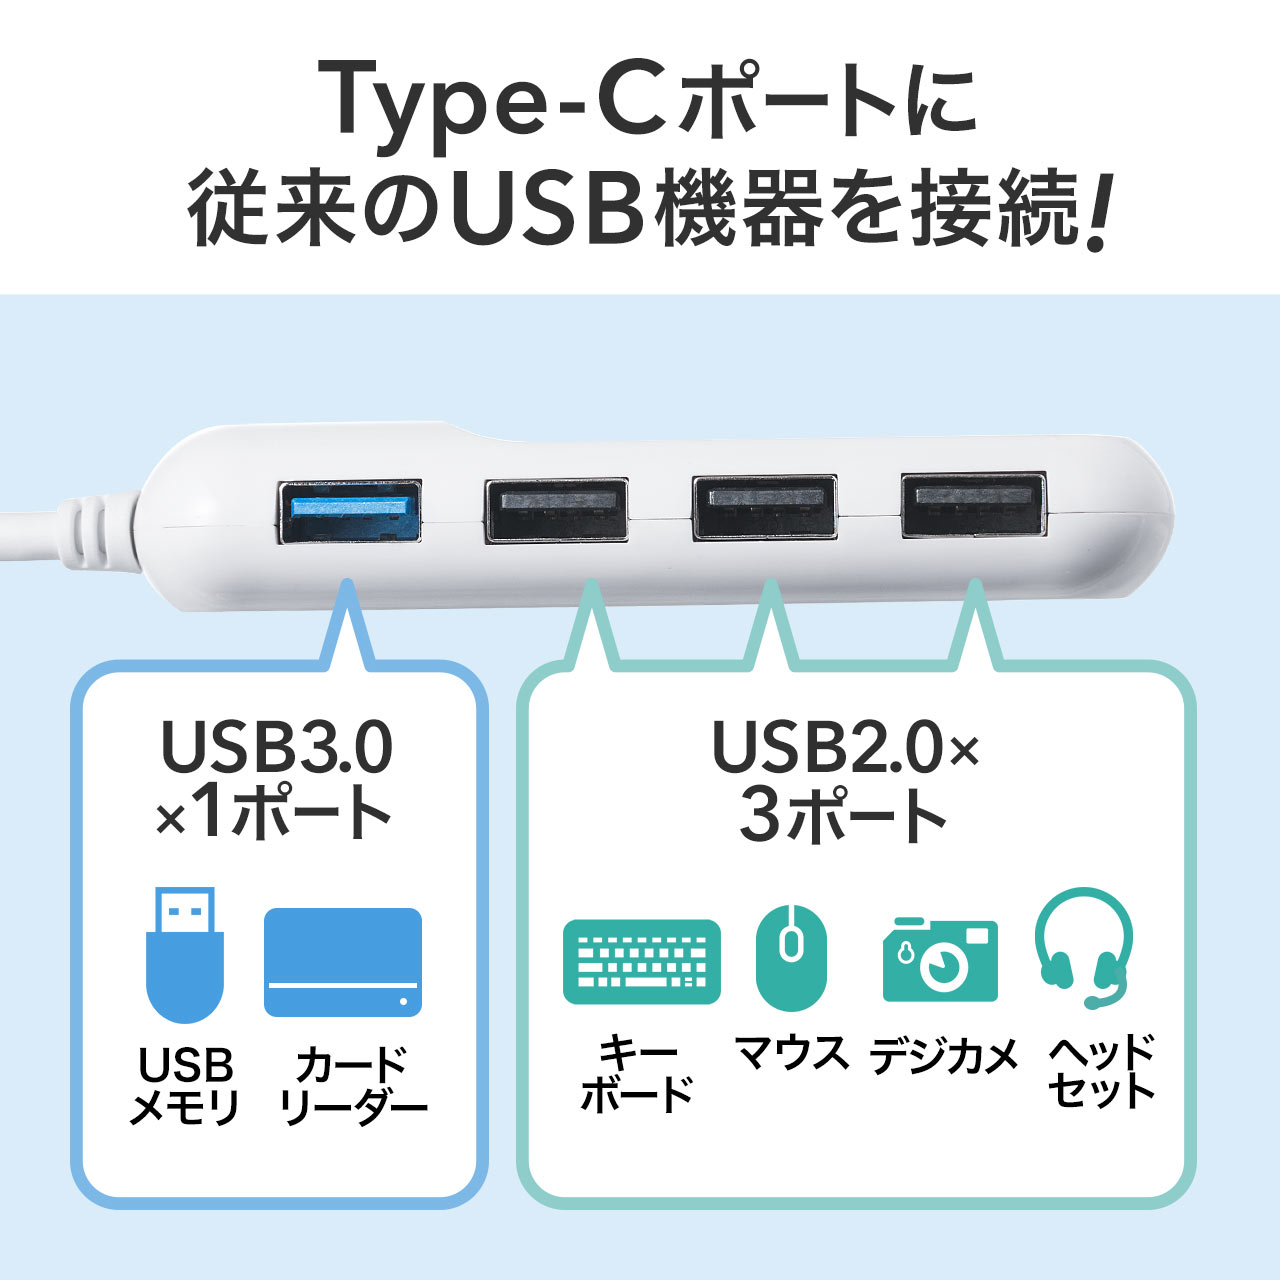 USB Type-CnuiUSB3.0EUSB2.0ER{nuE4|[gEubNj 400-HUB057BK